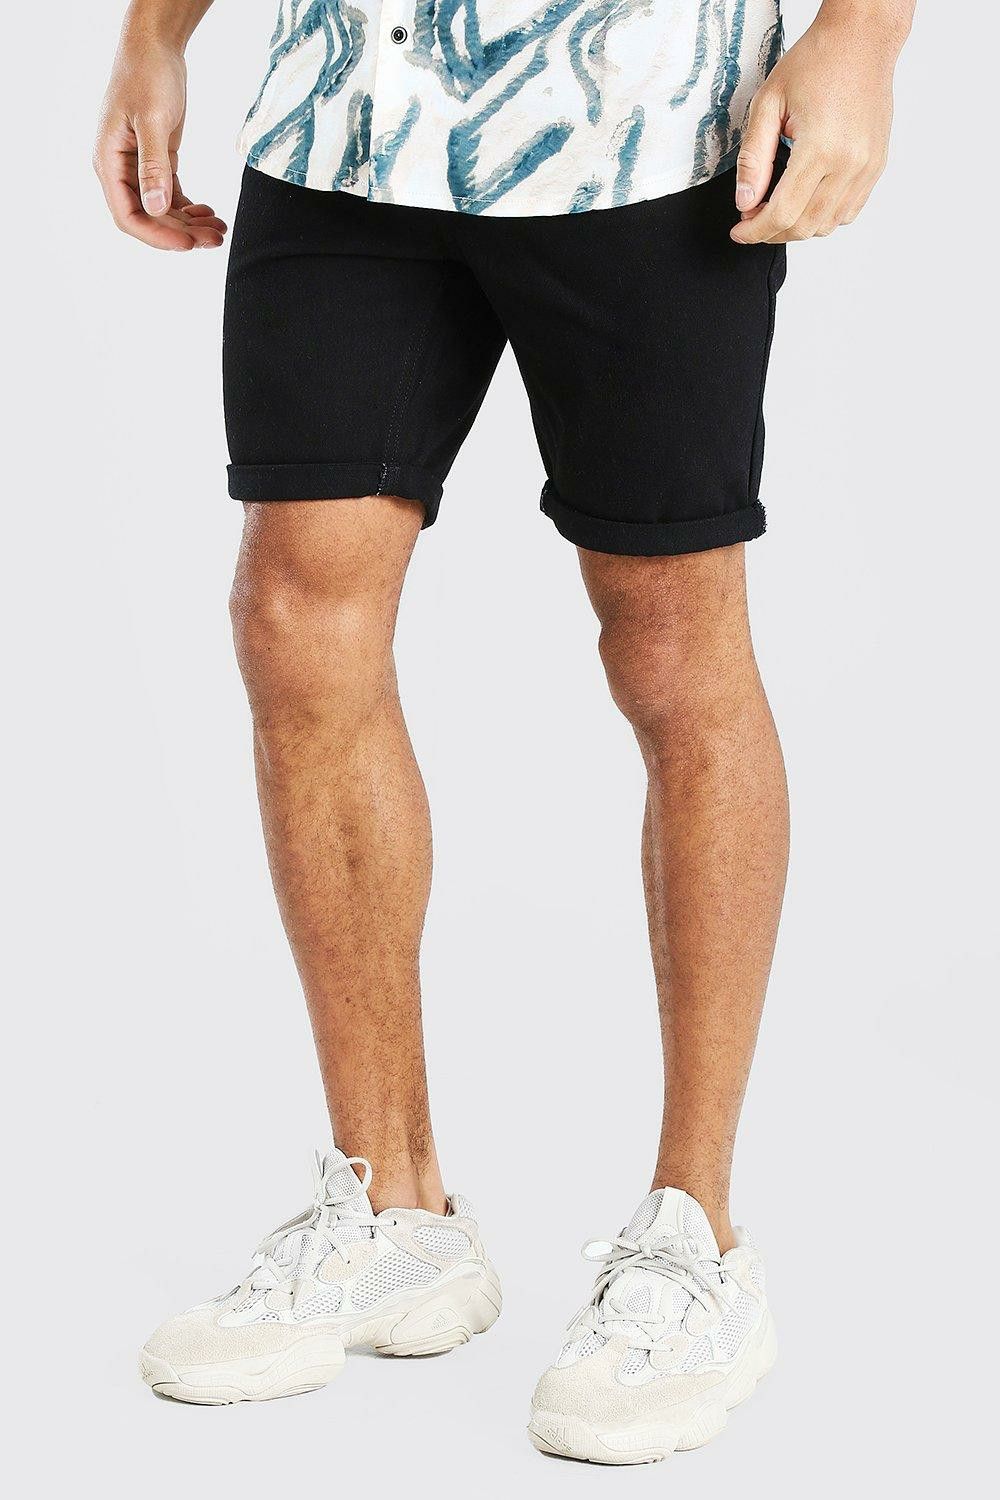 Black Slim Fit Jean Shorts|Size: 36